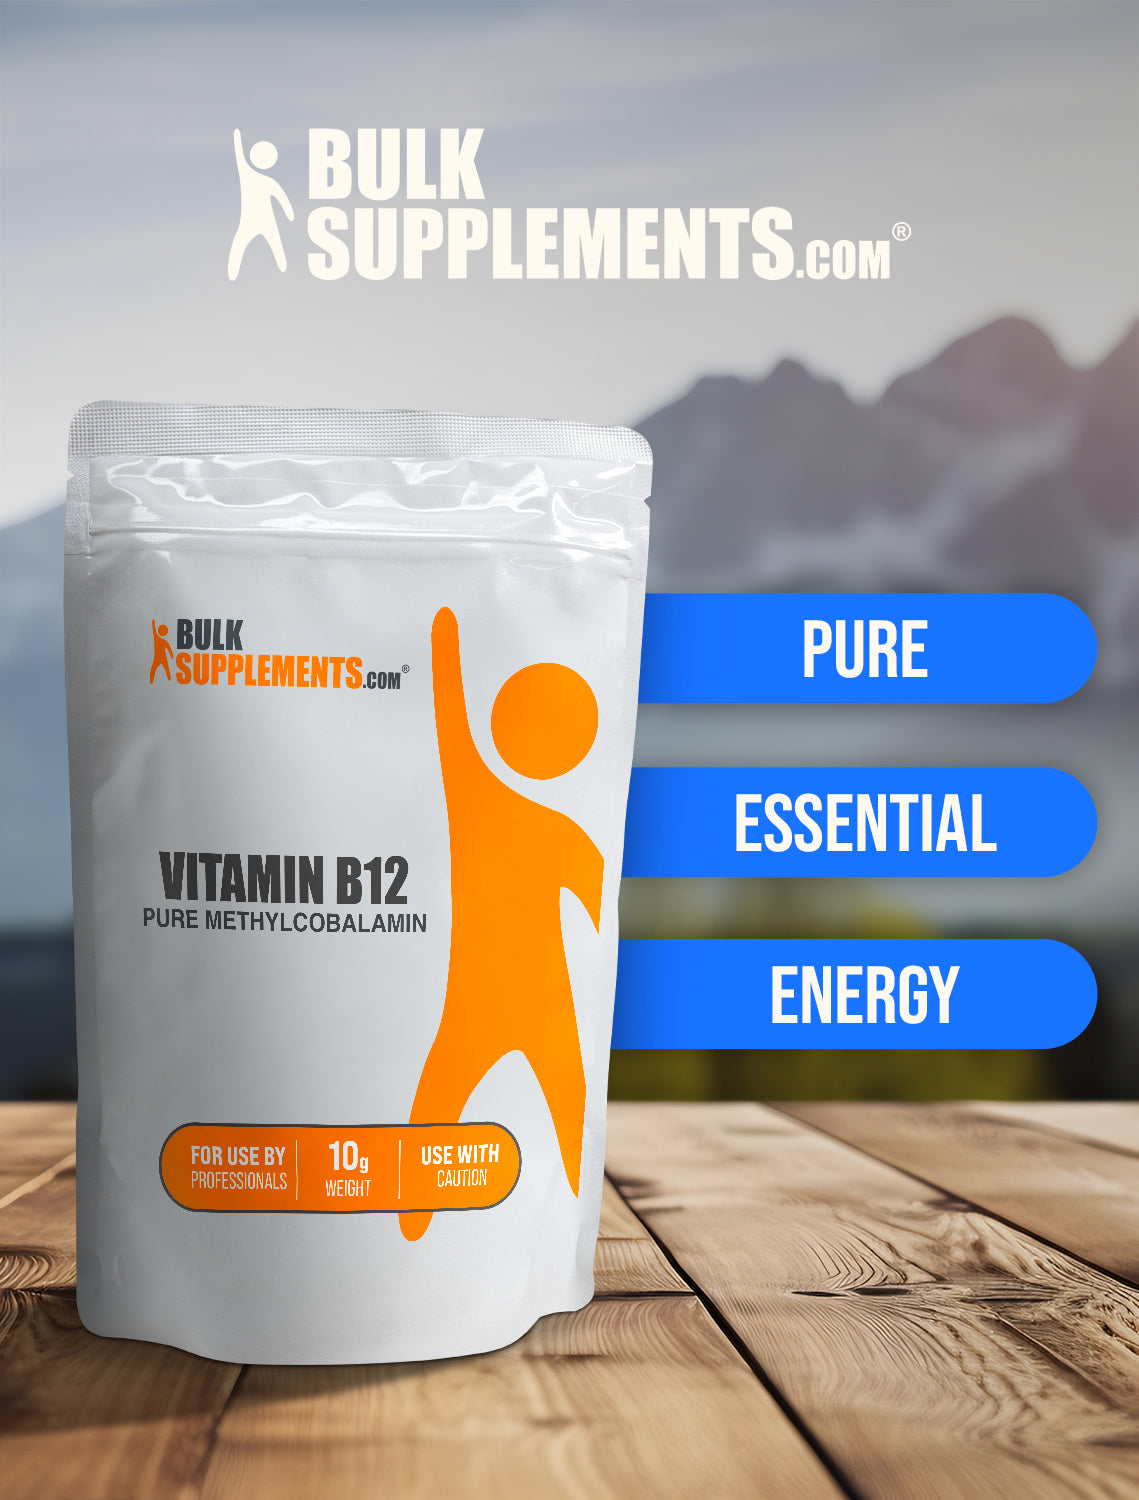 Vitamin B12 Pure Methylcobalamin powder keyword image 10g